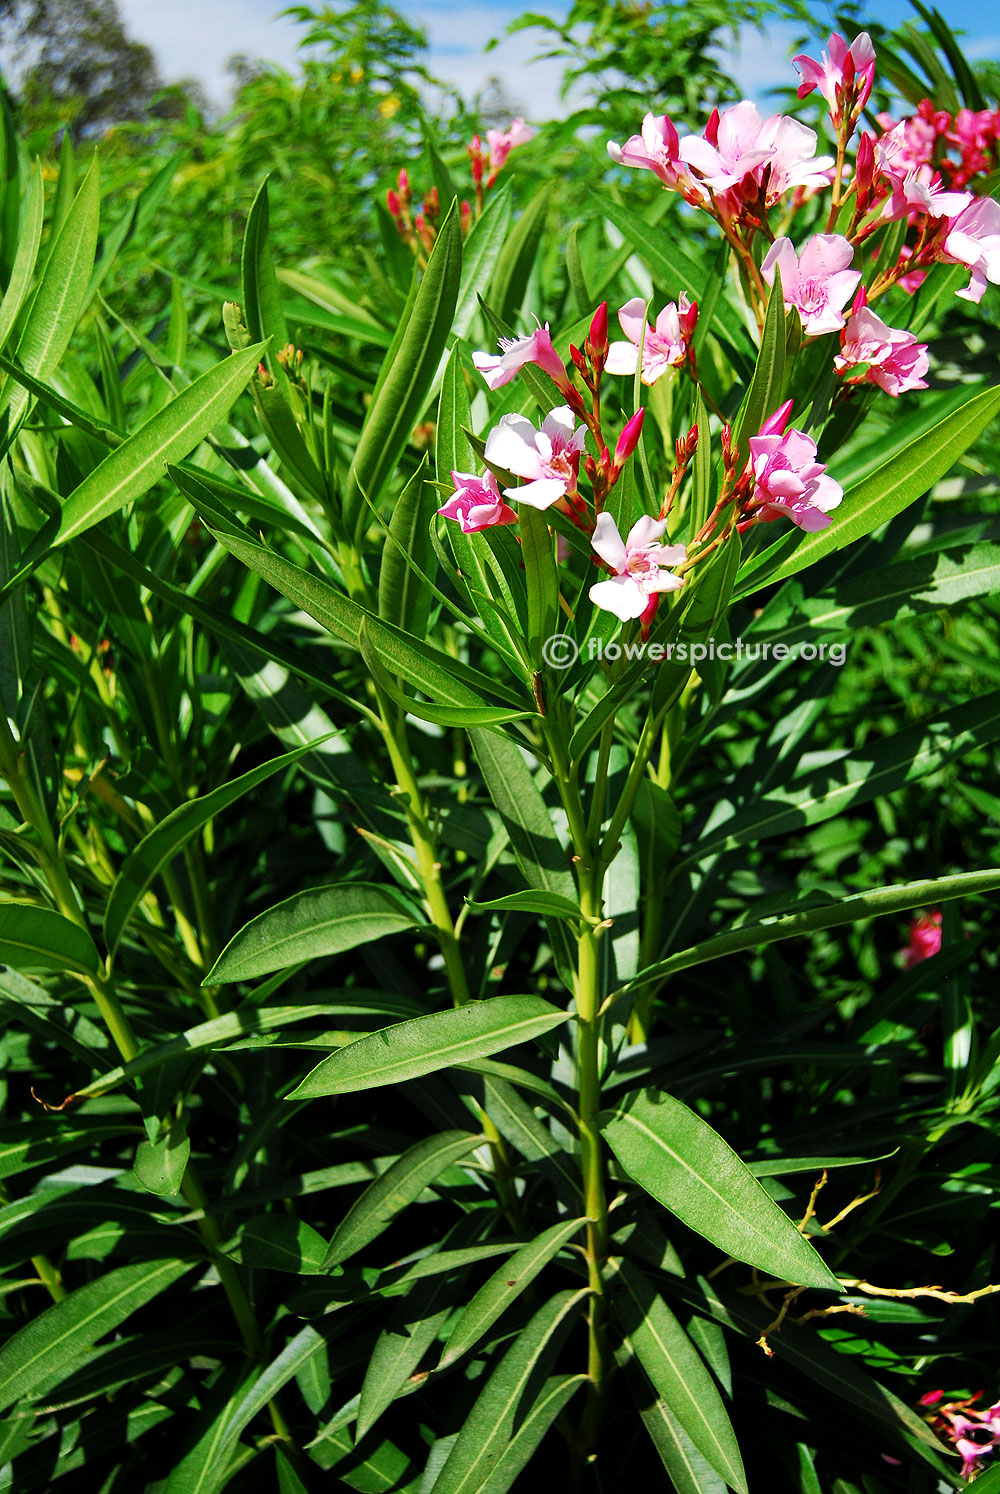 Nerium plant foliage[single bloom]